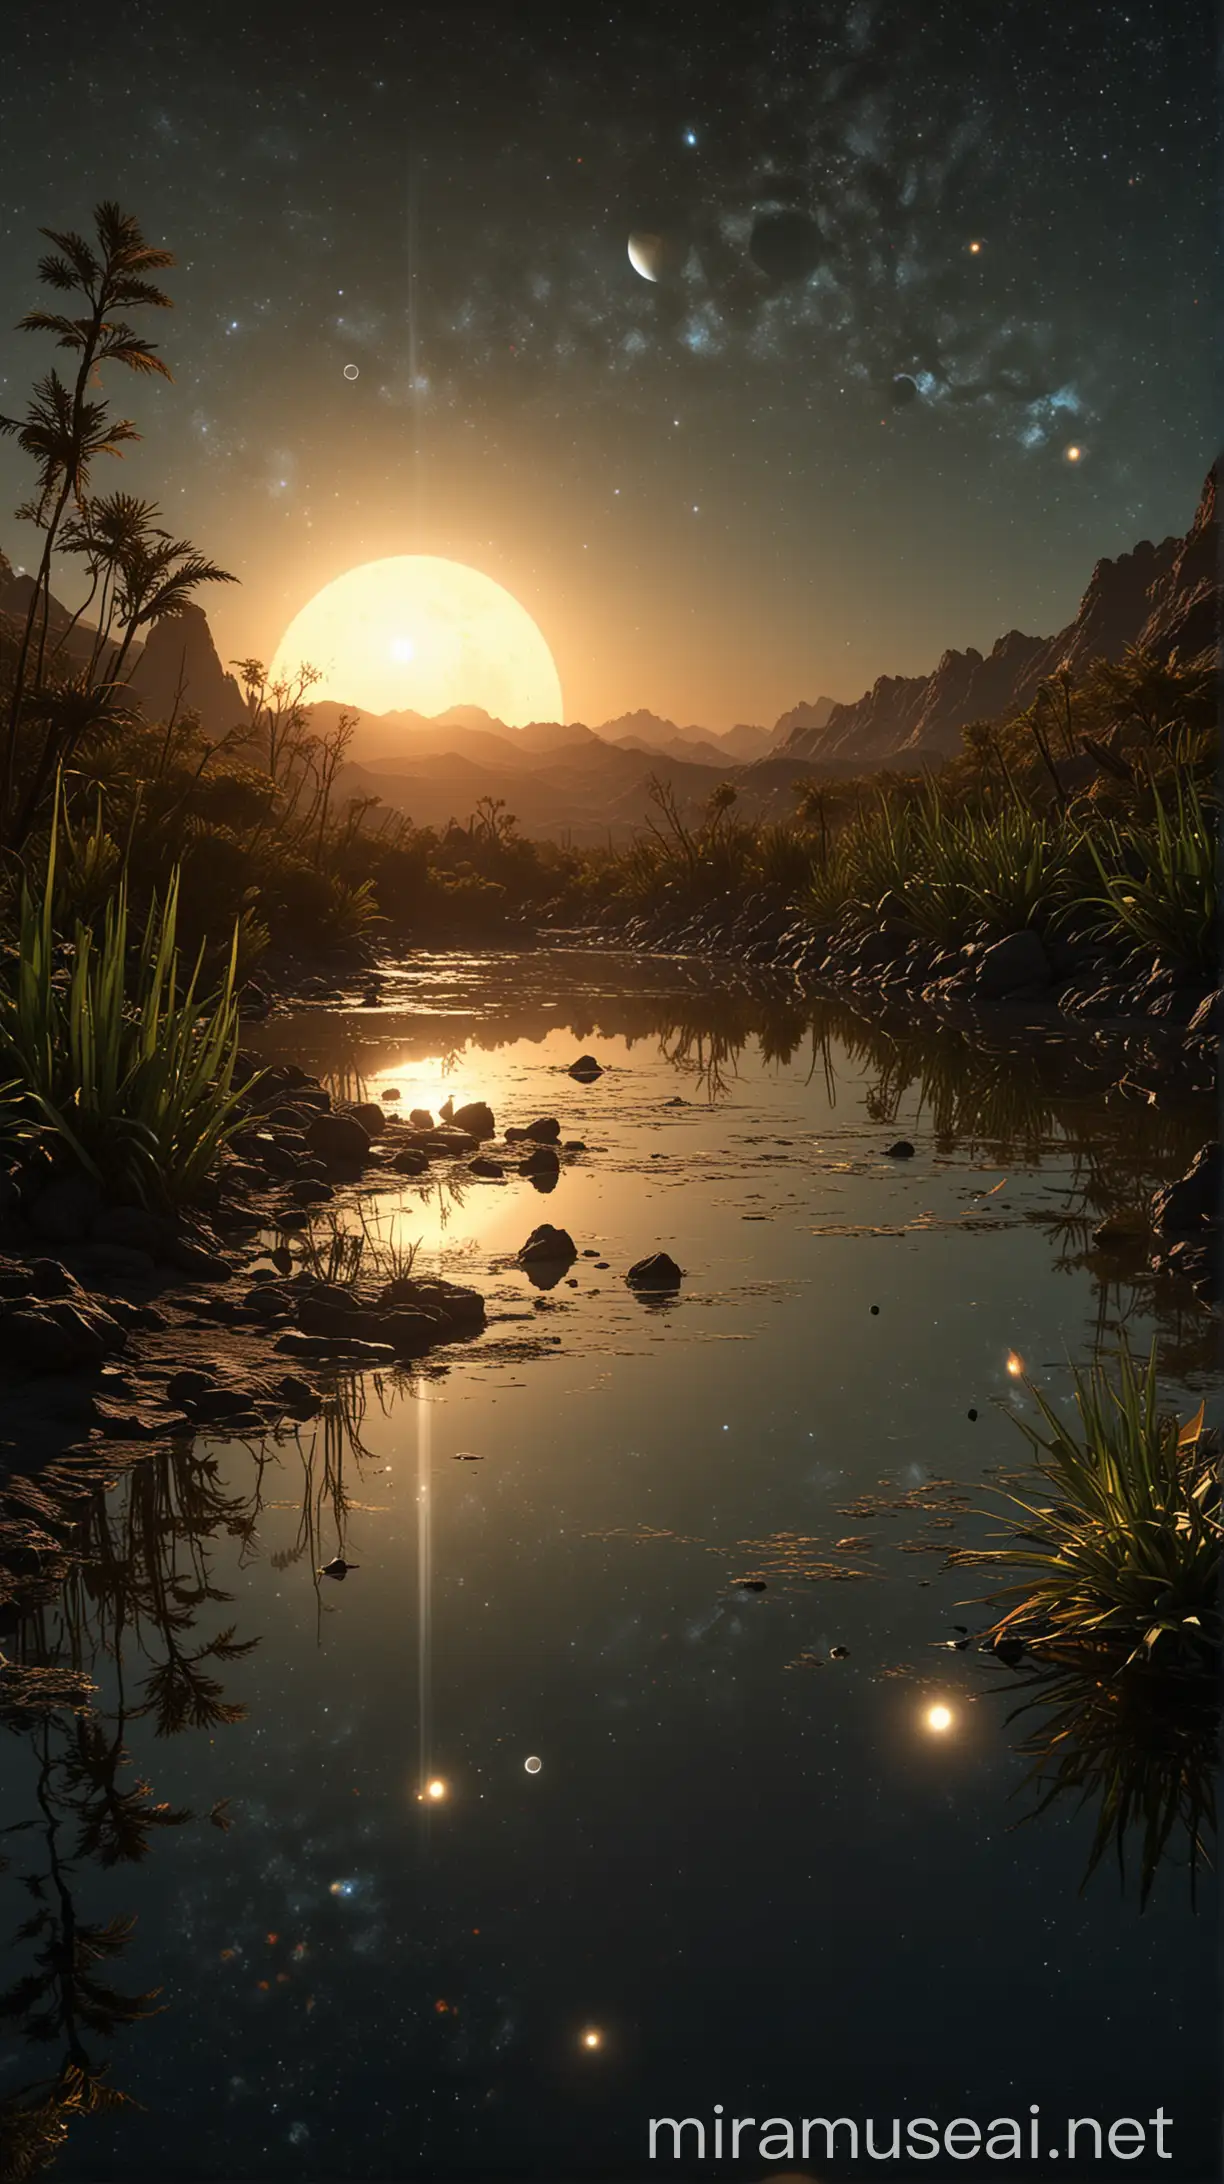 Kepler16b Twin Sunrises Illuminate Alien Landscape